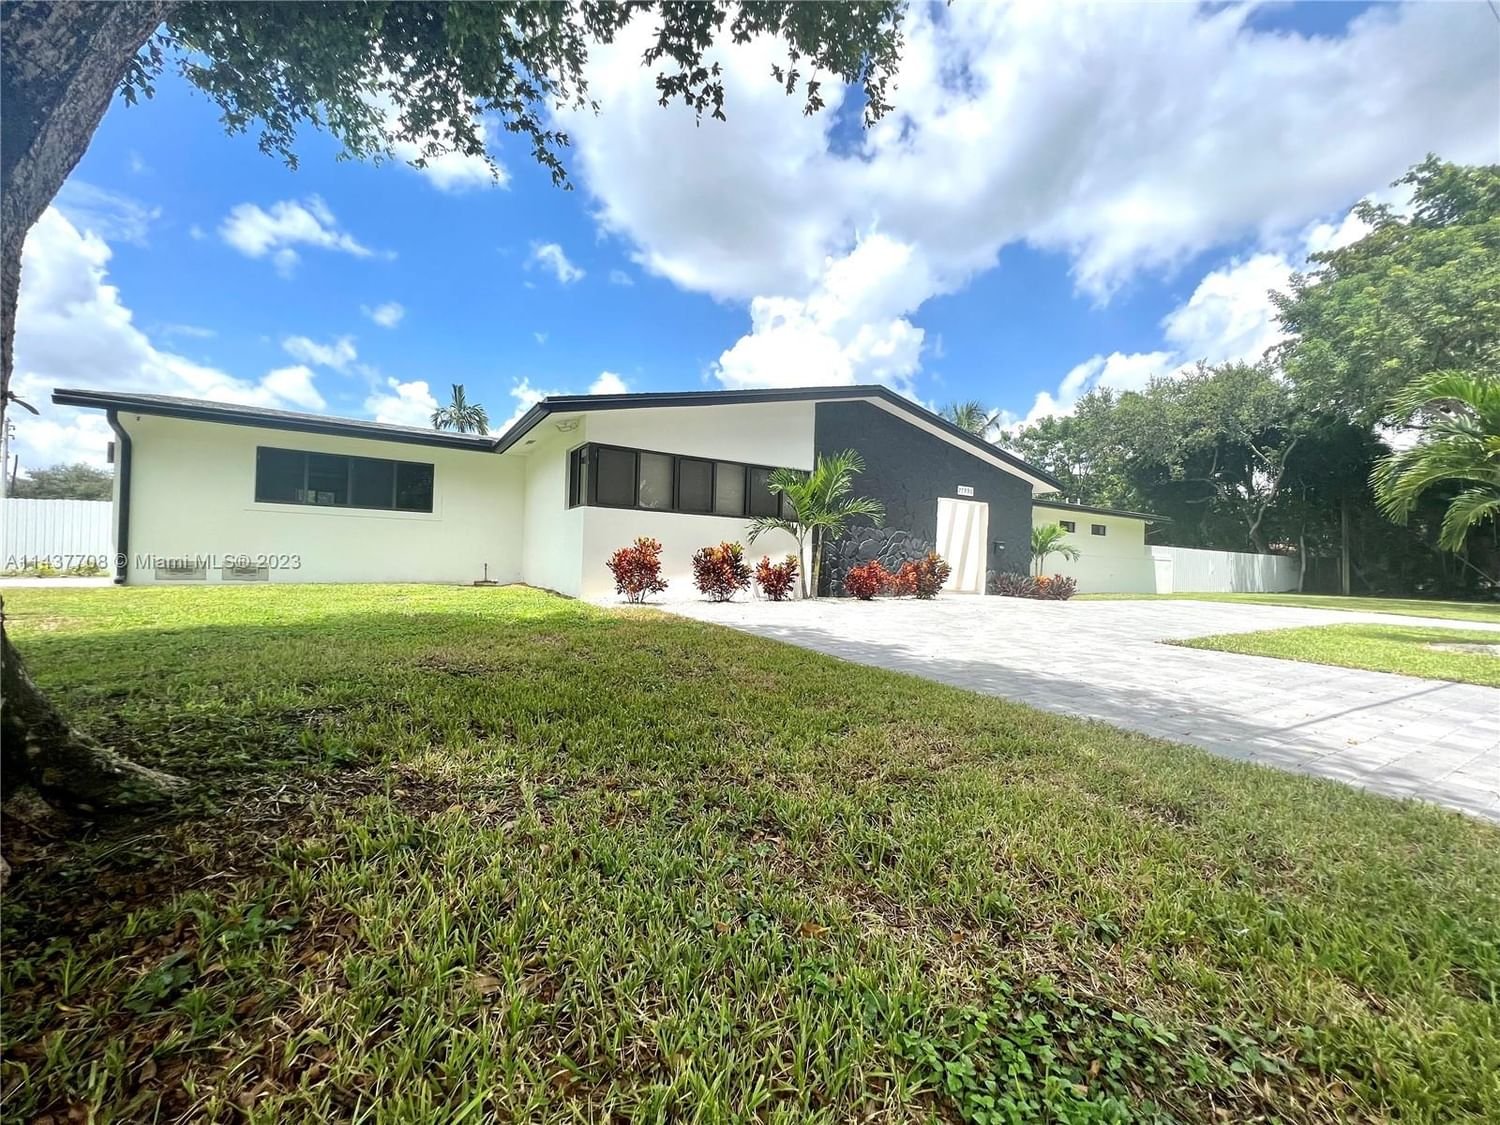 Real estate property located at 11990 84th Ave, Miami-Dade County, Miami, FL